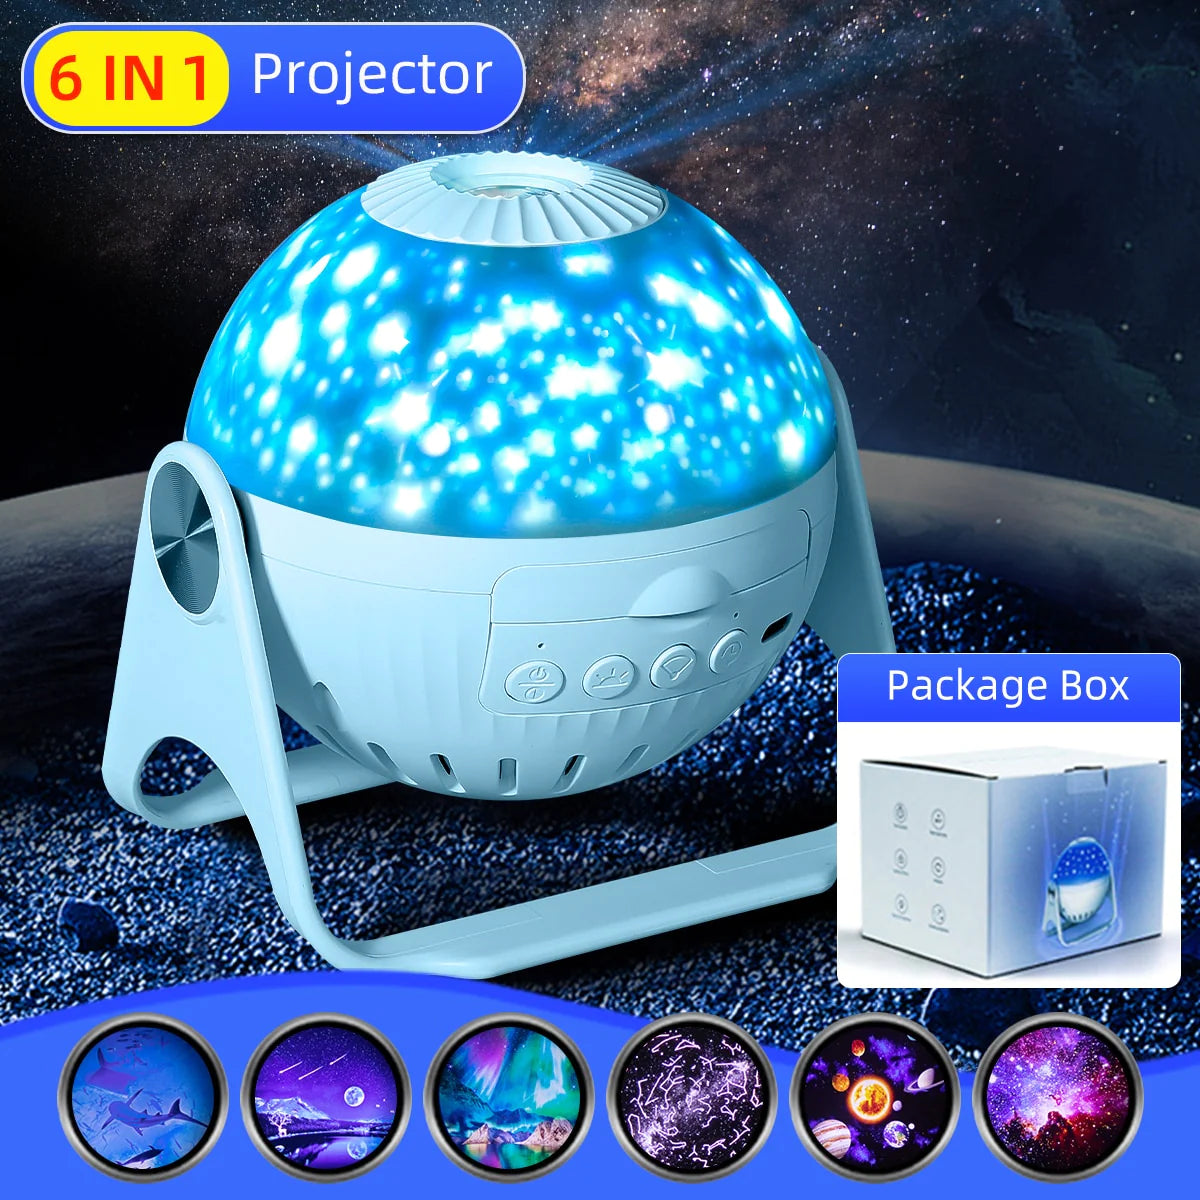 Planetarium projector